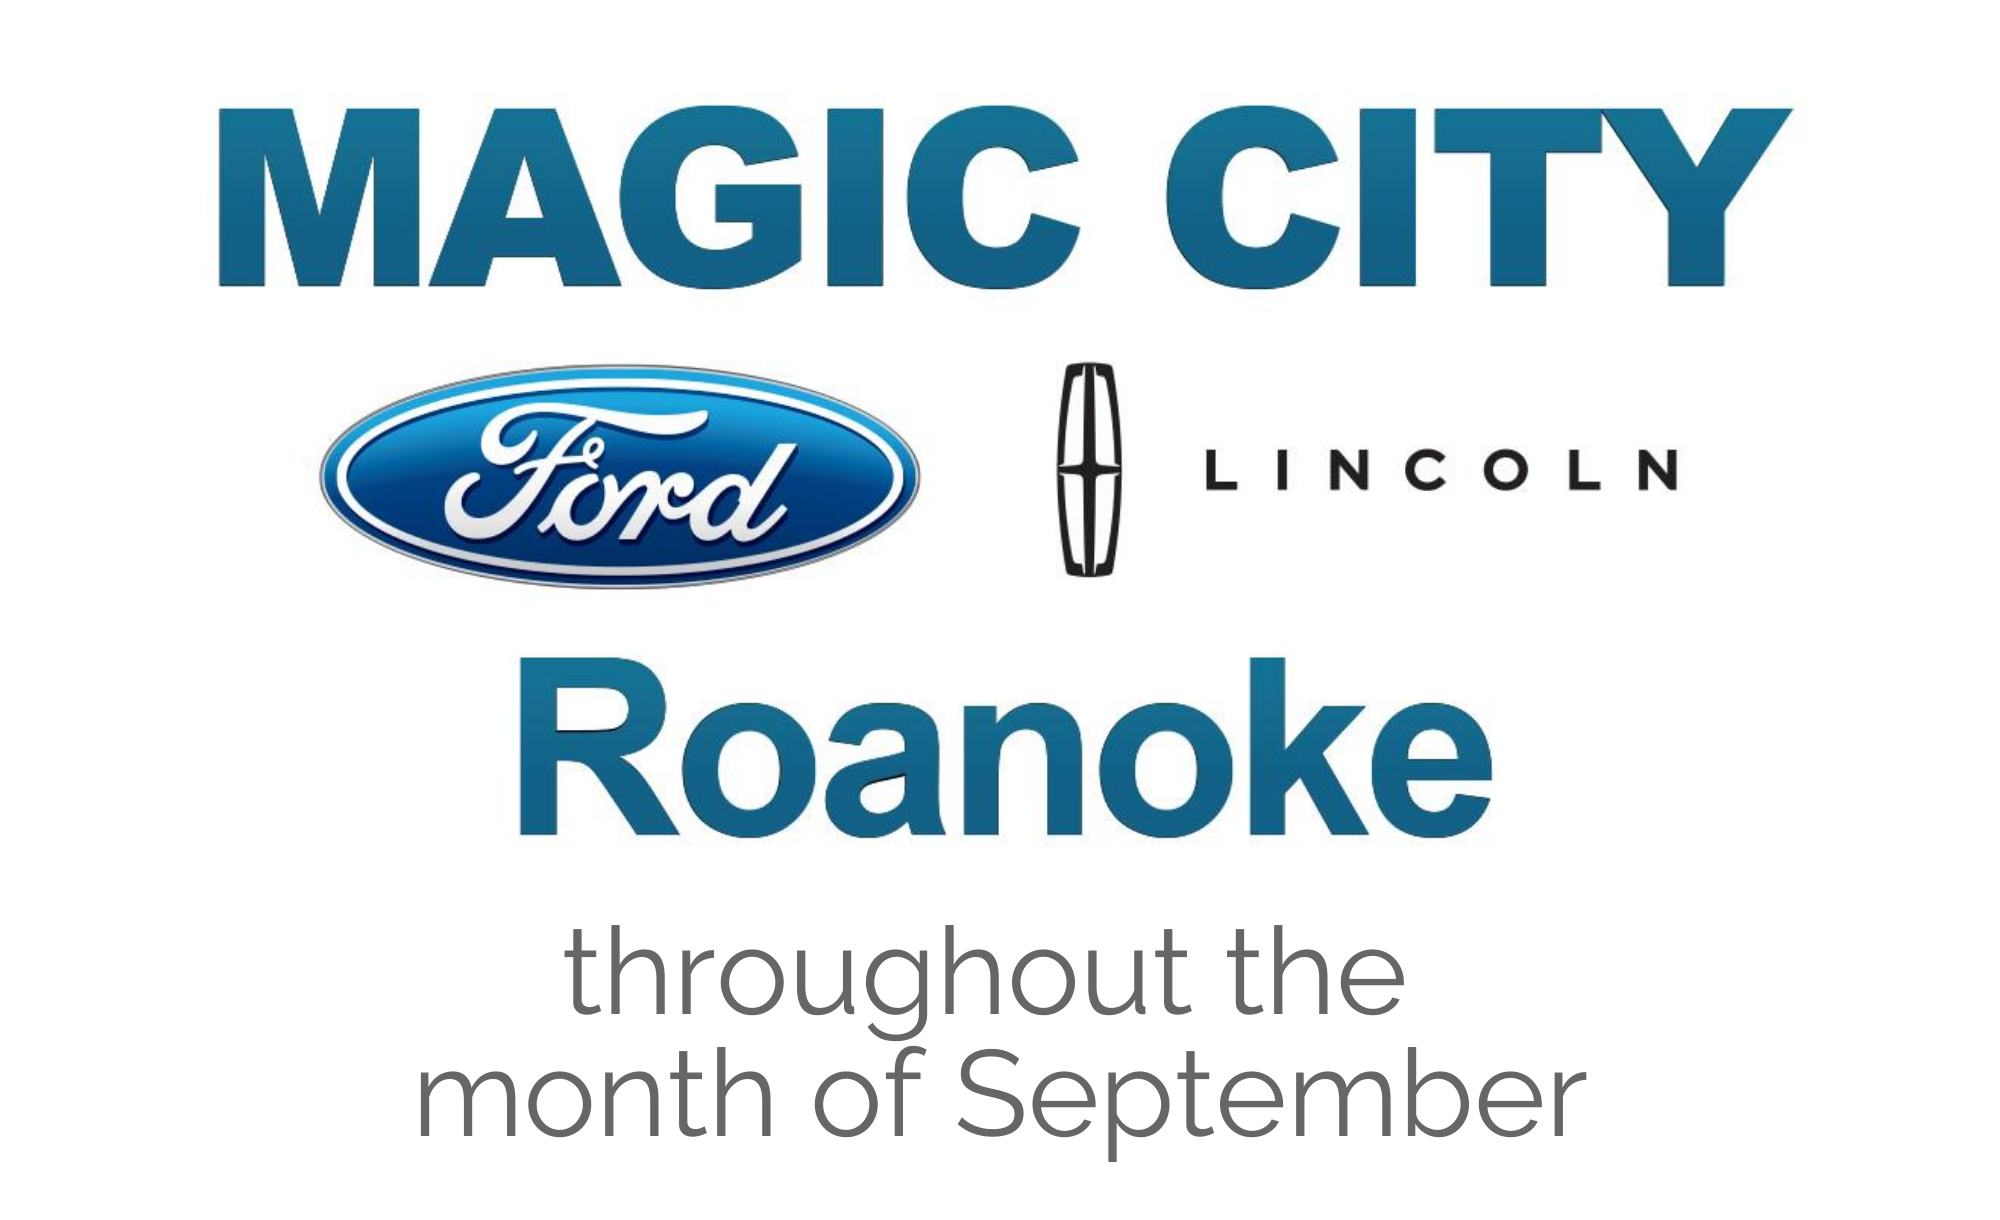 Magic City Ford Lincoln Roanoke logo